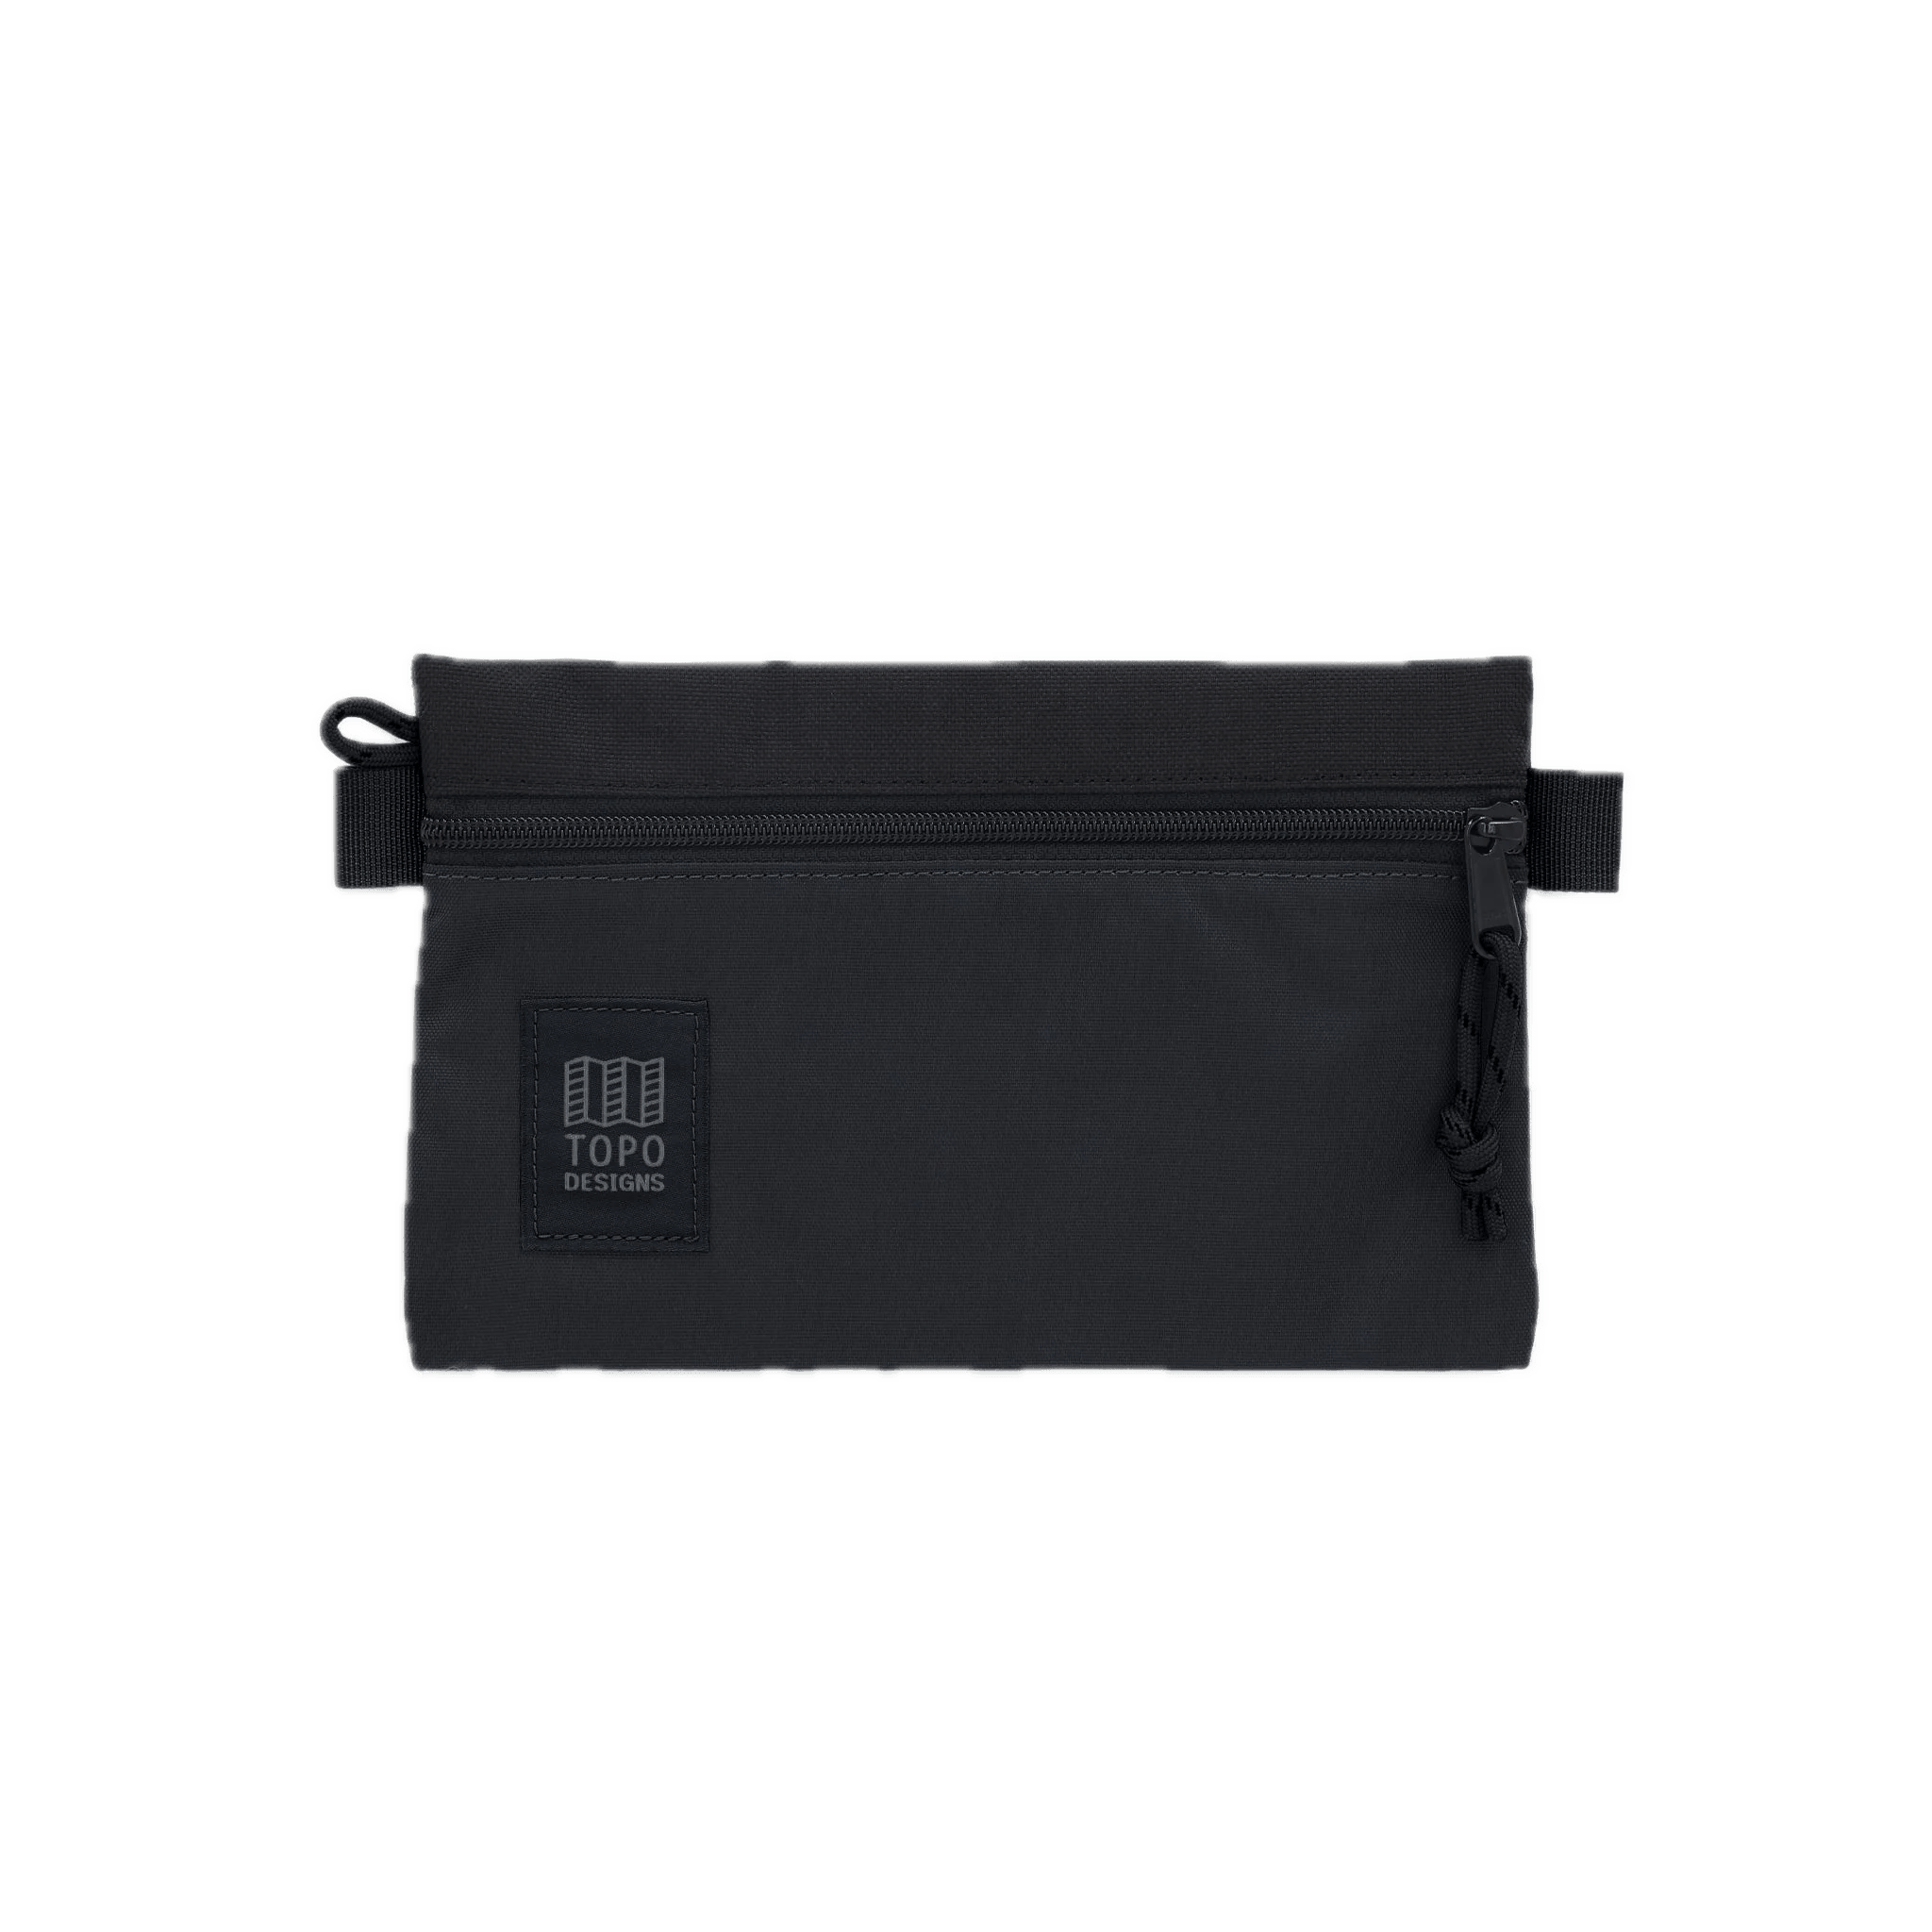 Neceser Topo Designs Bag Small Black Black - ECRU